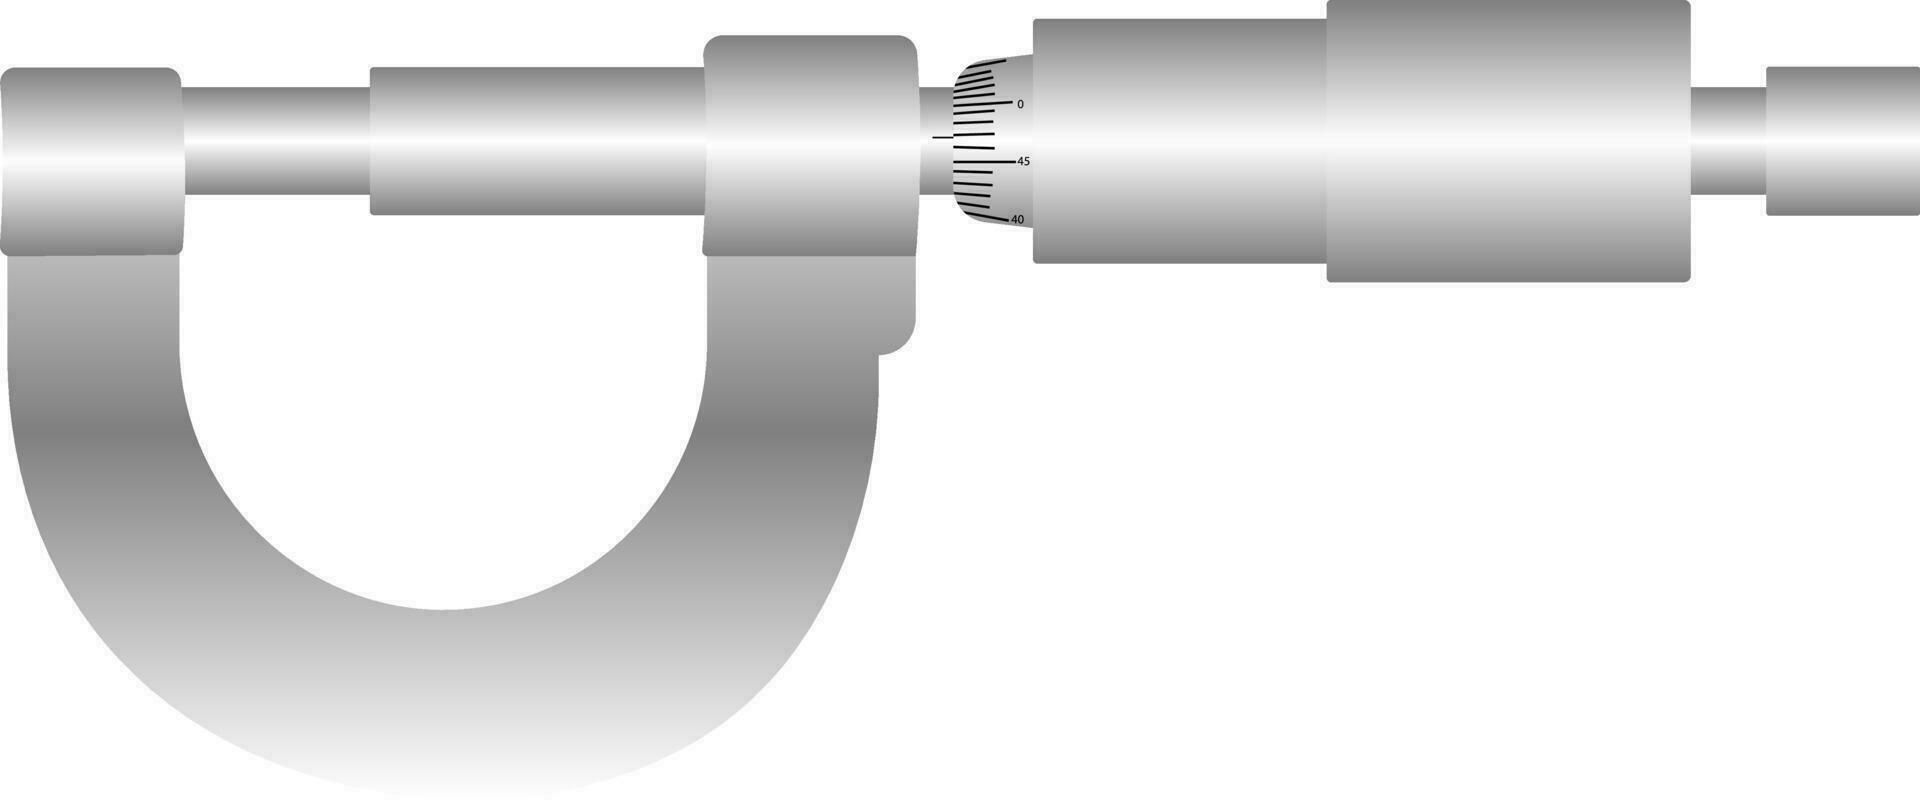 gris minimalista tornillo calibre vector ilustración en blanco antecedentes